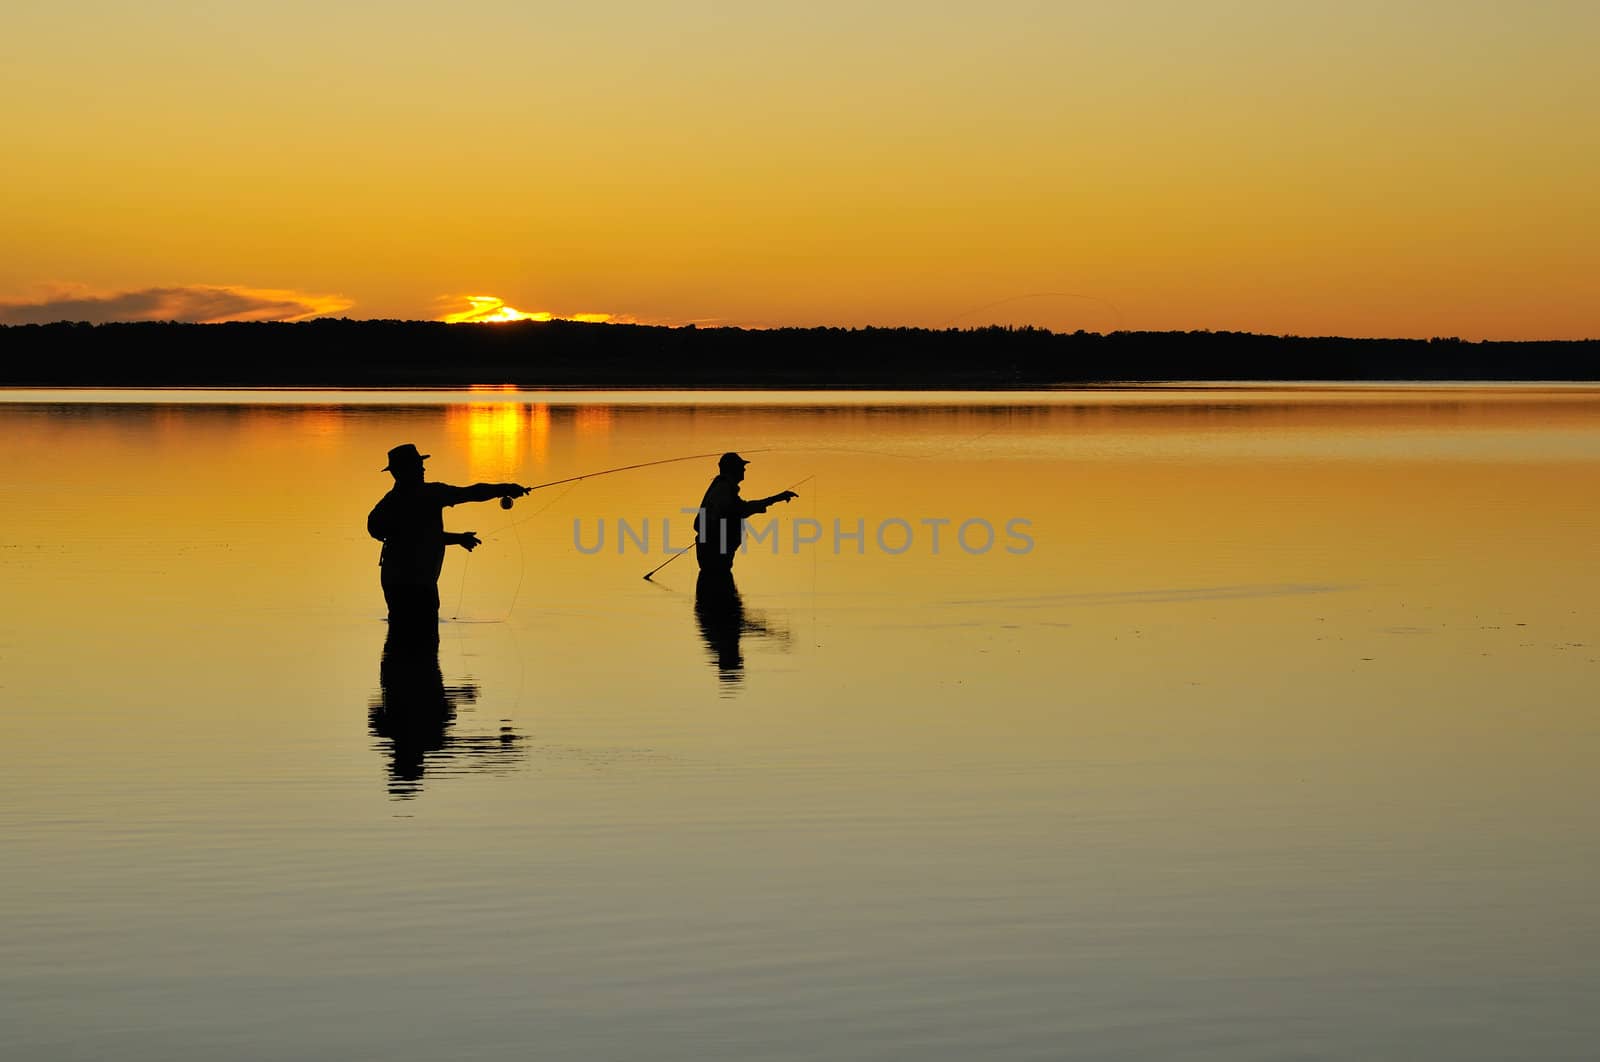 Fishermen silhouettes by Hbak